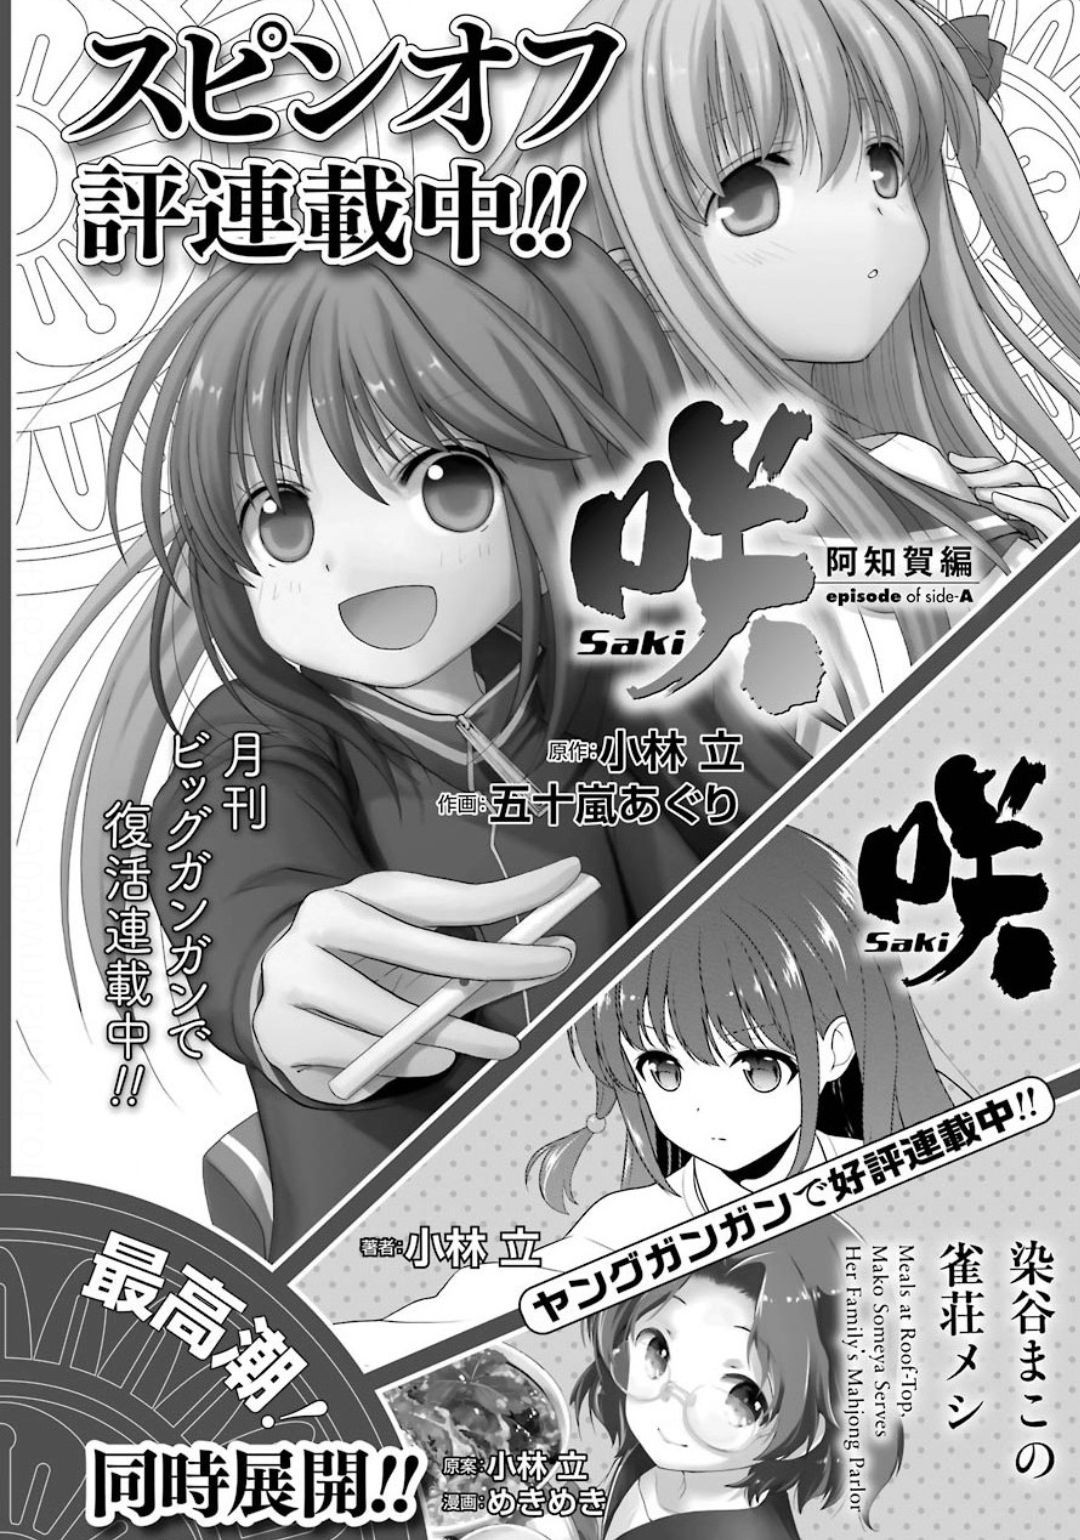 Shinohayu - The Dawn of Age Manga - Chapter 081 - Page 29